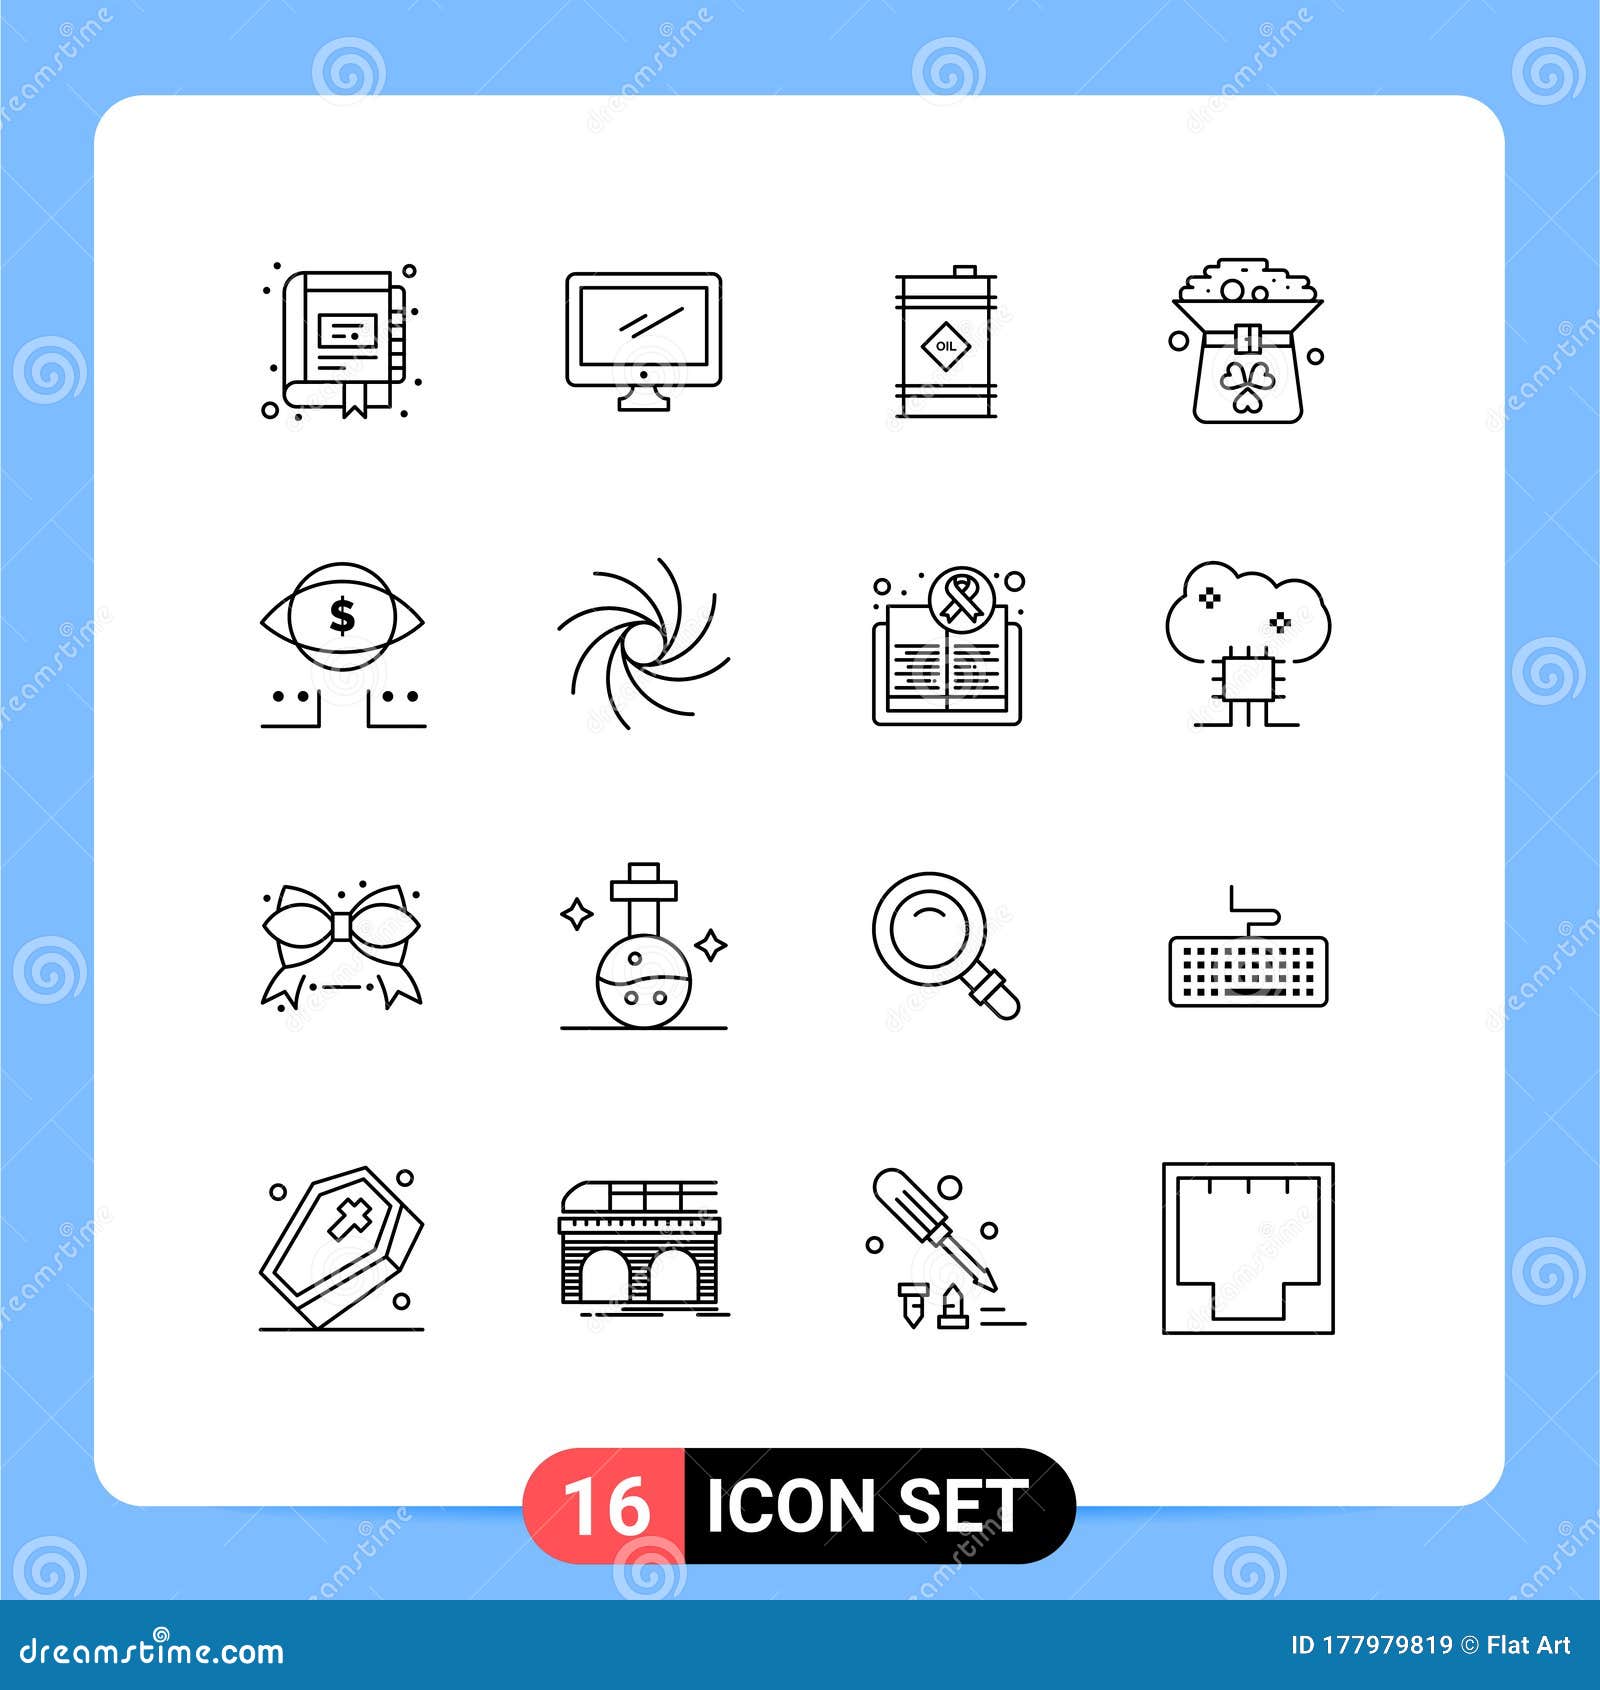 user interface pack of 16 basic outlines of hat, coin, imac, clover, oil barrel